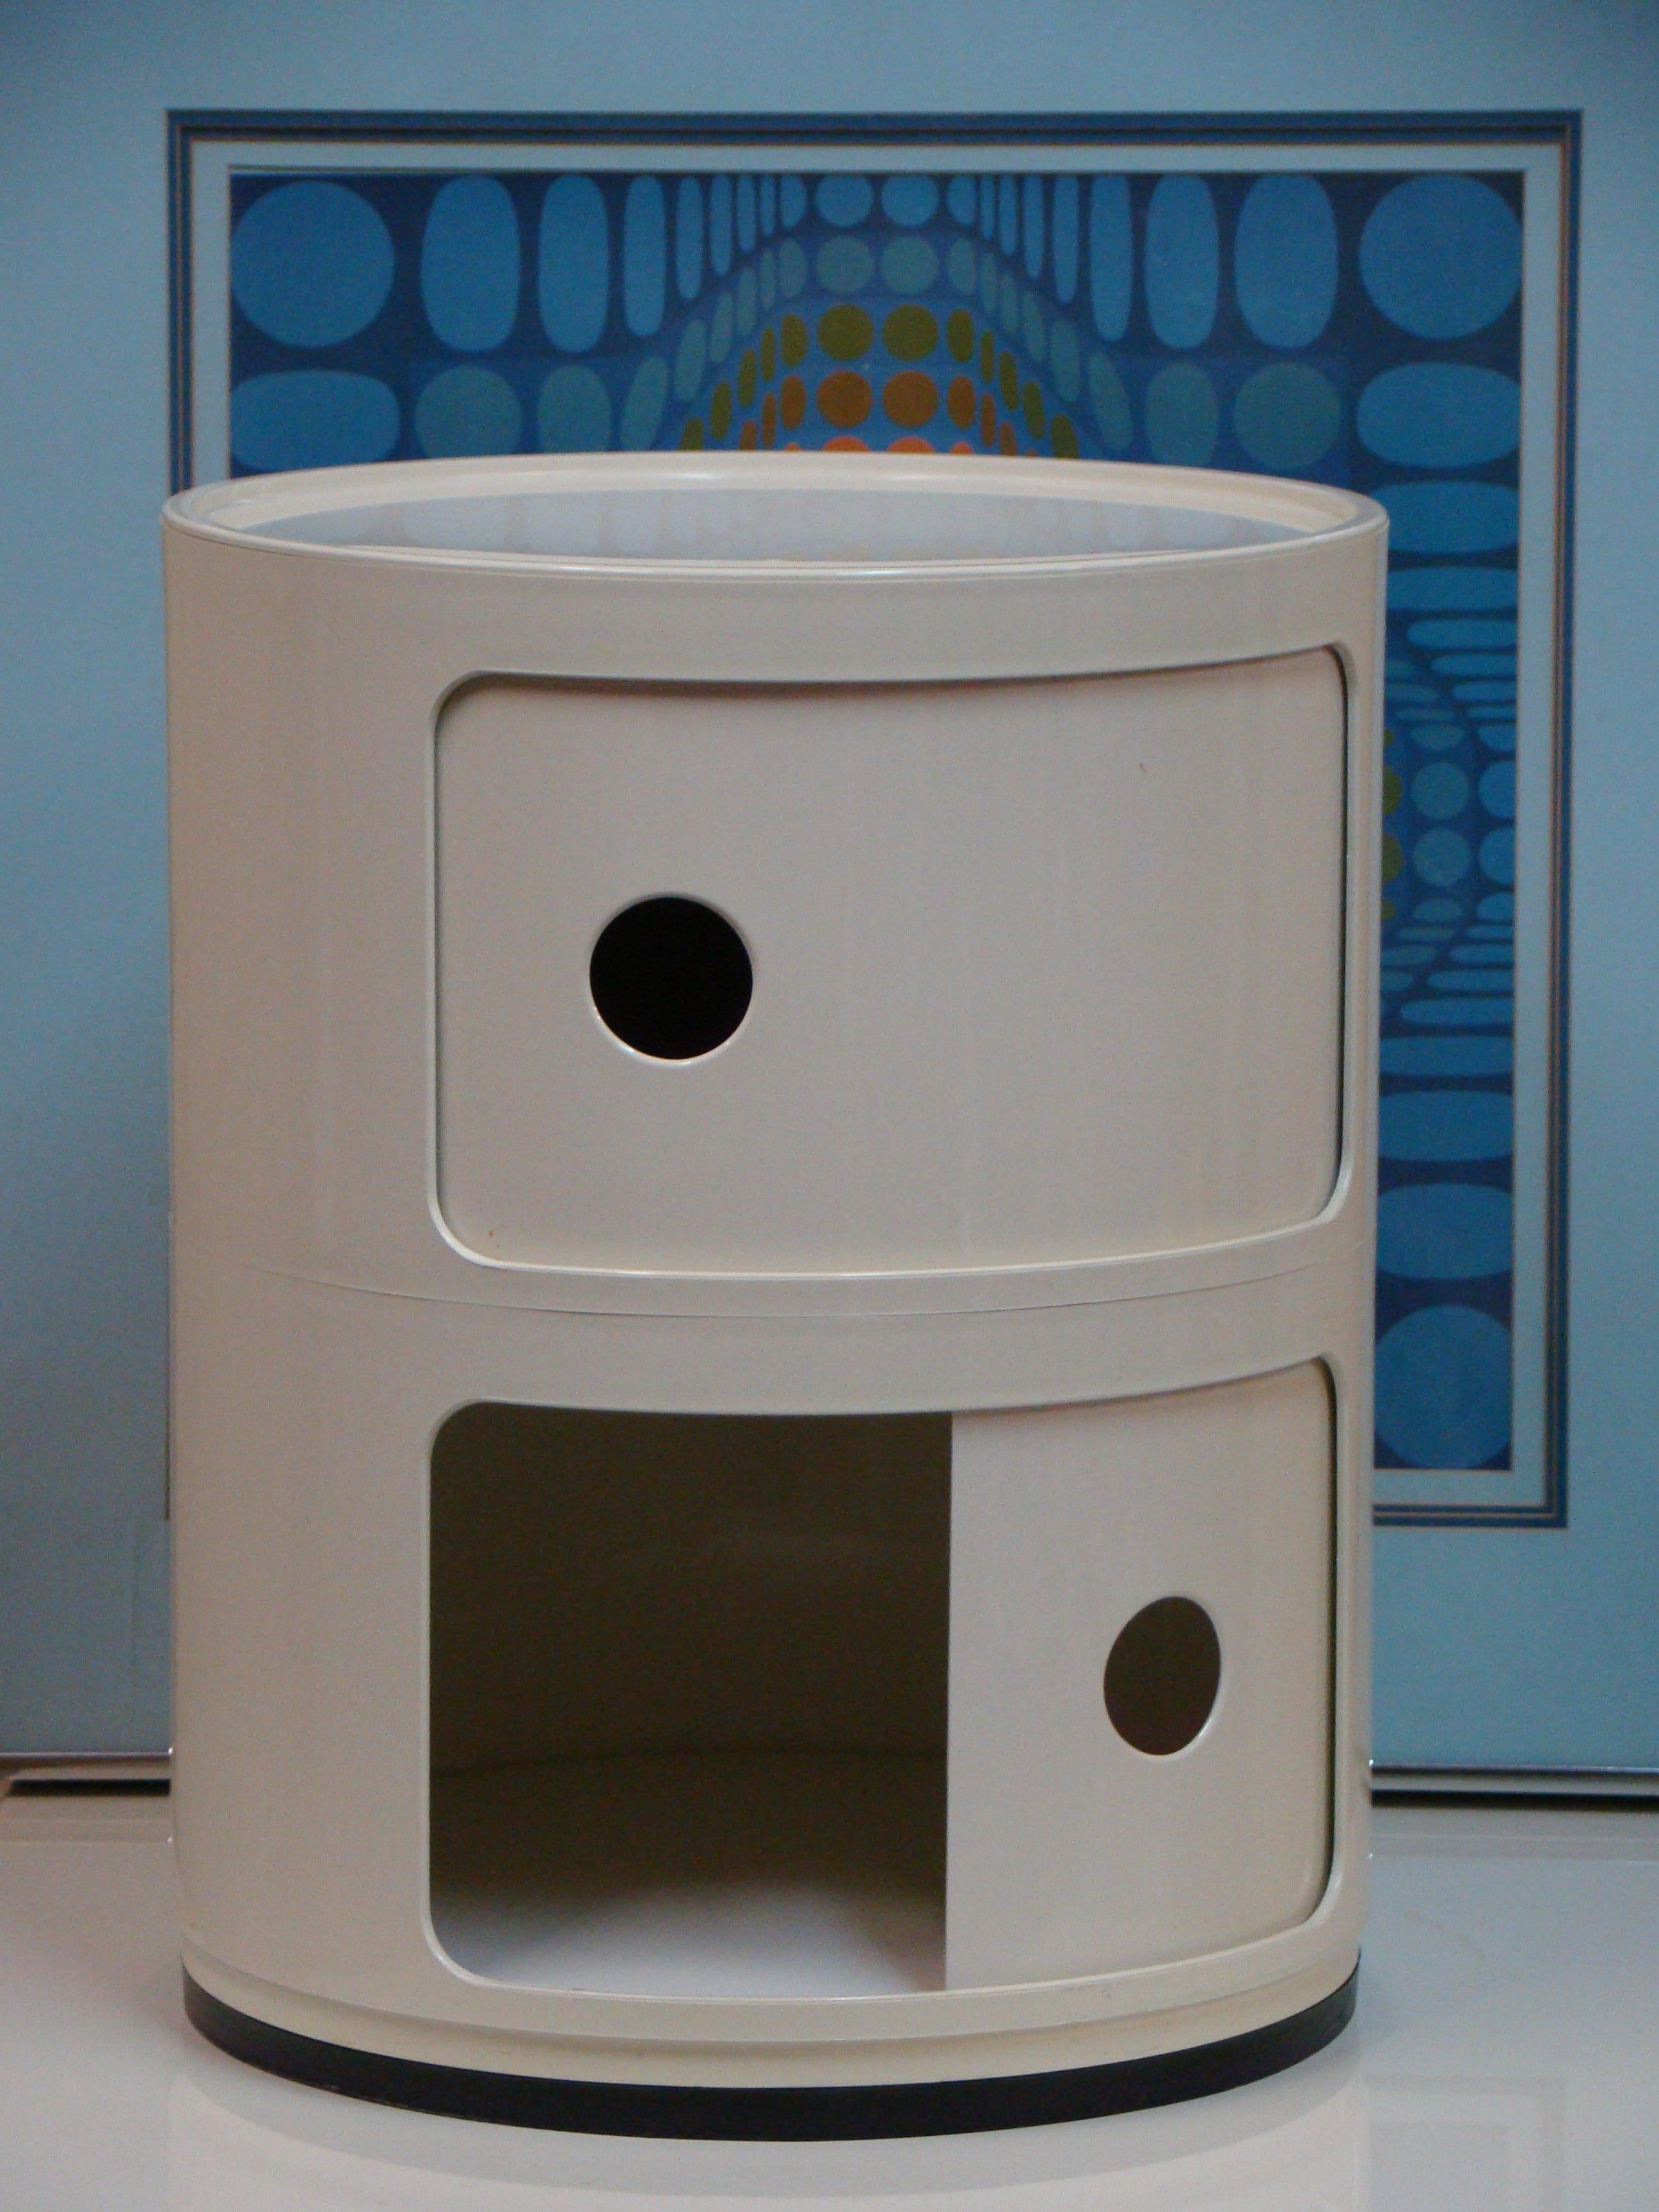 Vintage Kartell 2-section storage pedestal designed by Anna Castelli. At 15.75